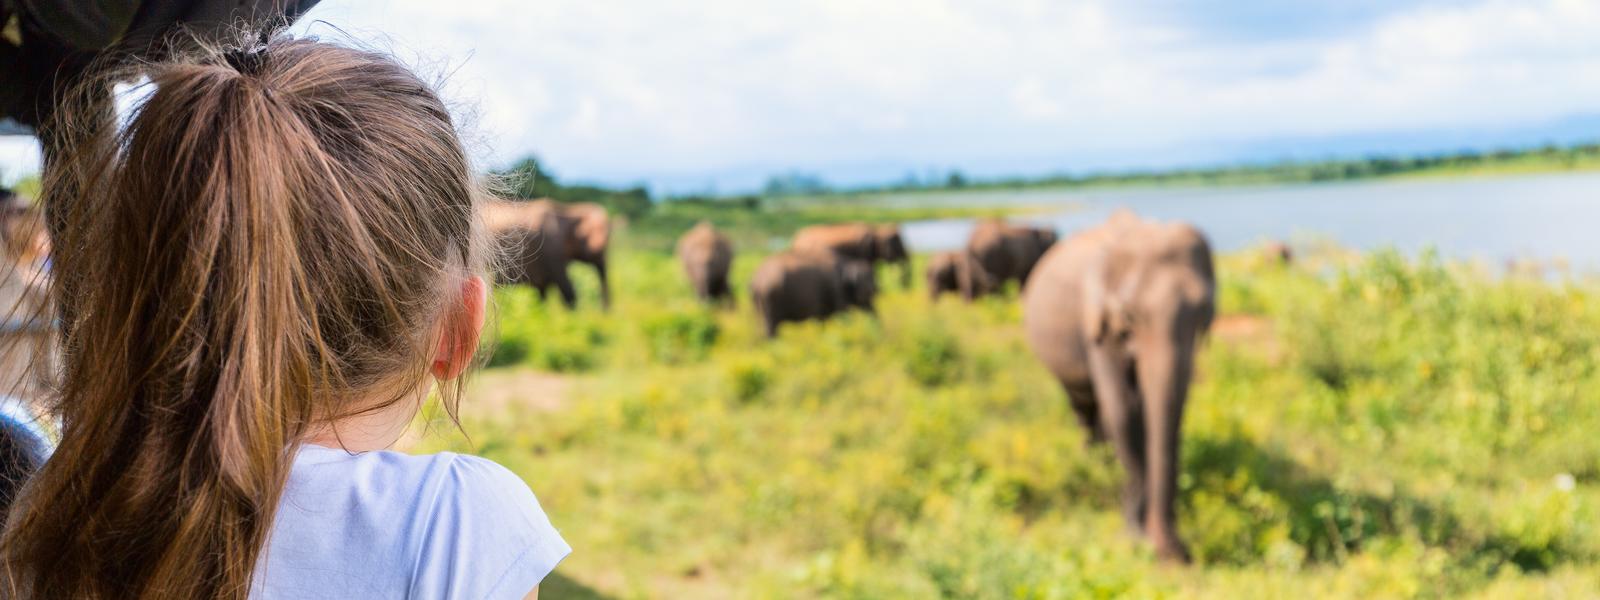 Sri lanka girl looking at elephant